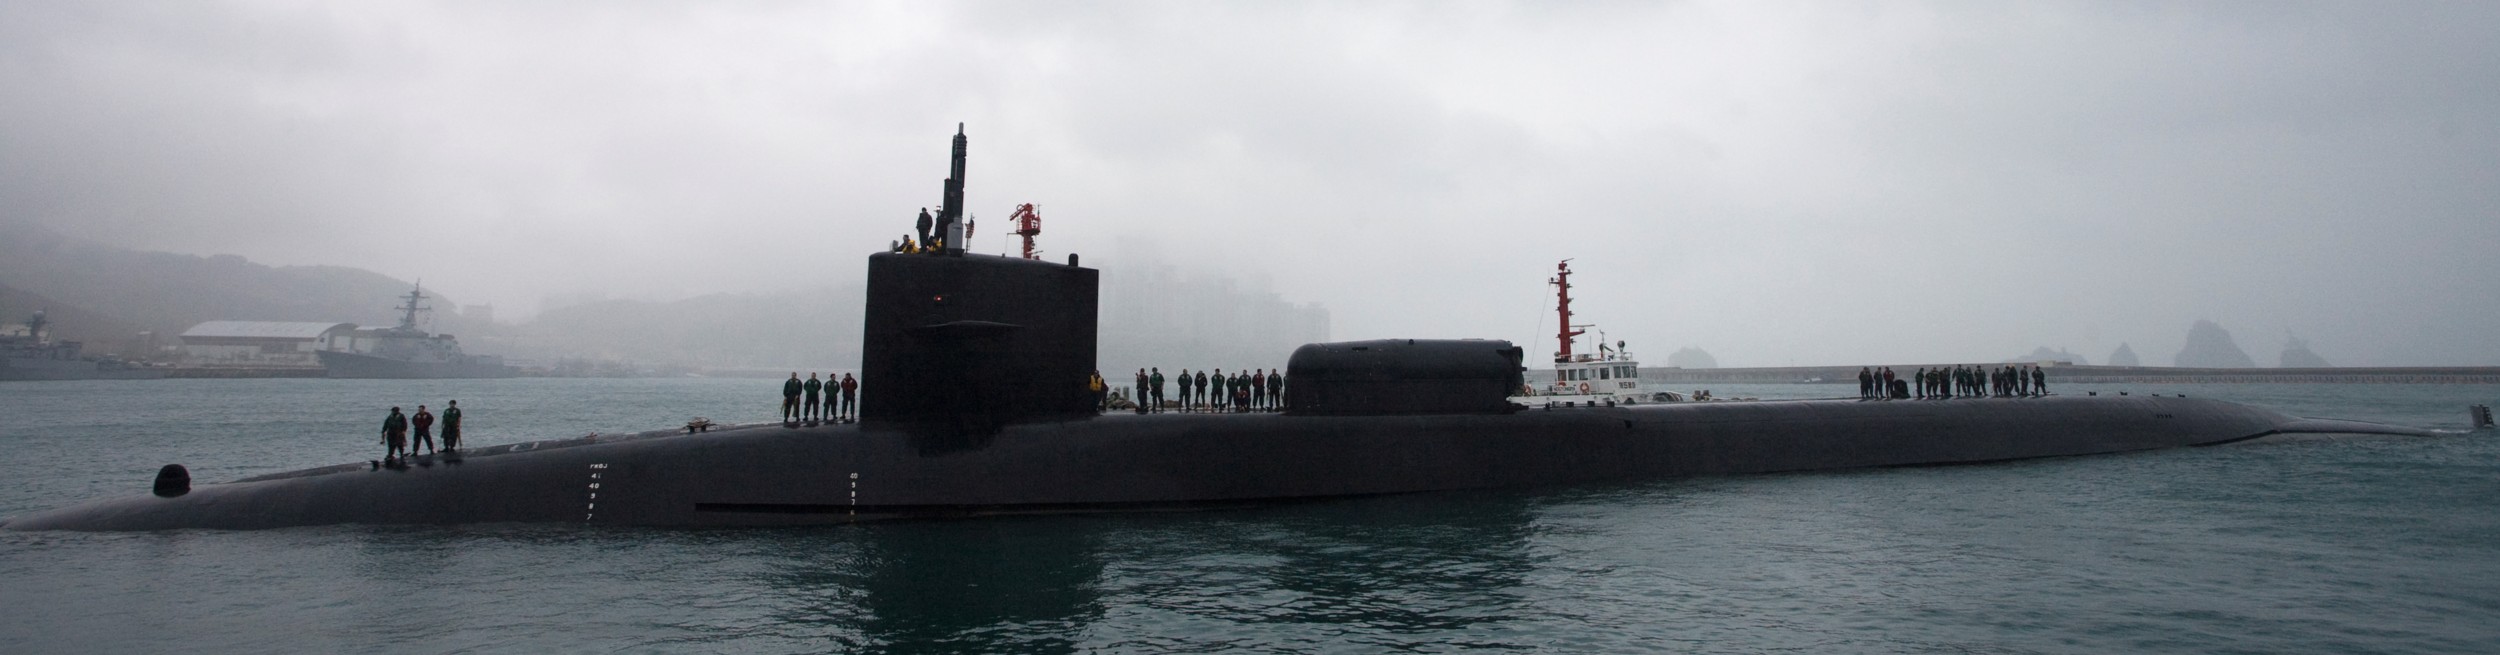 ssgn-727 uss michigan guided missile submarine 2010 24 busan korea